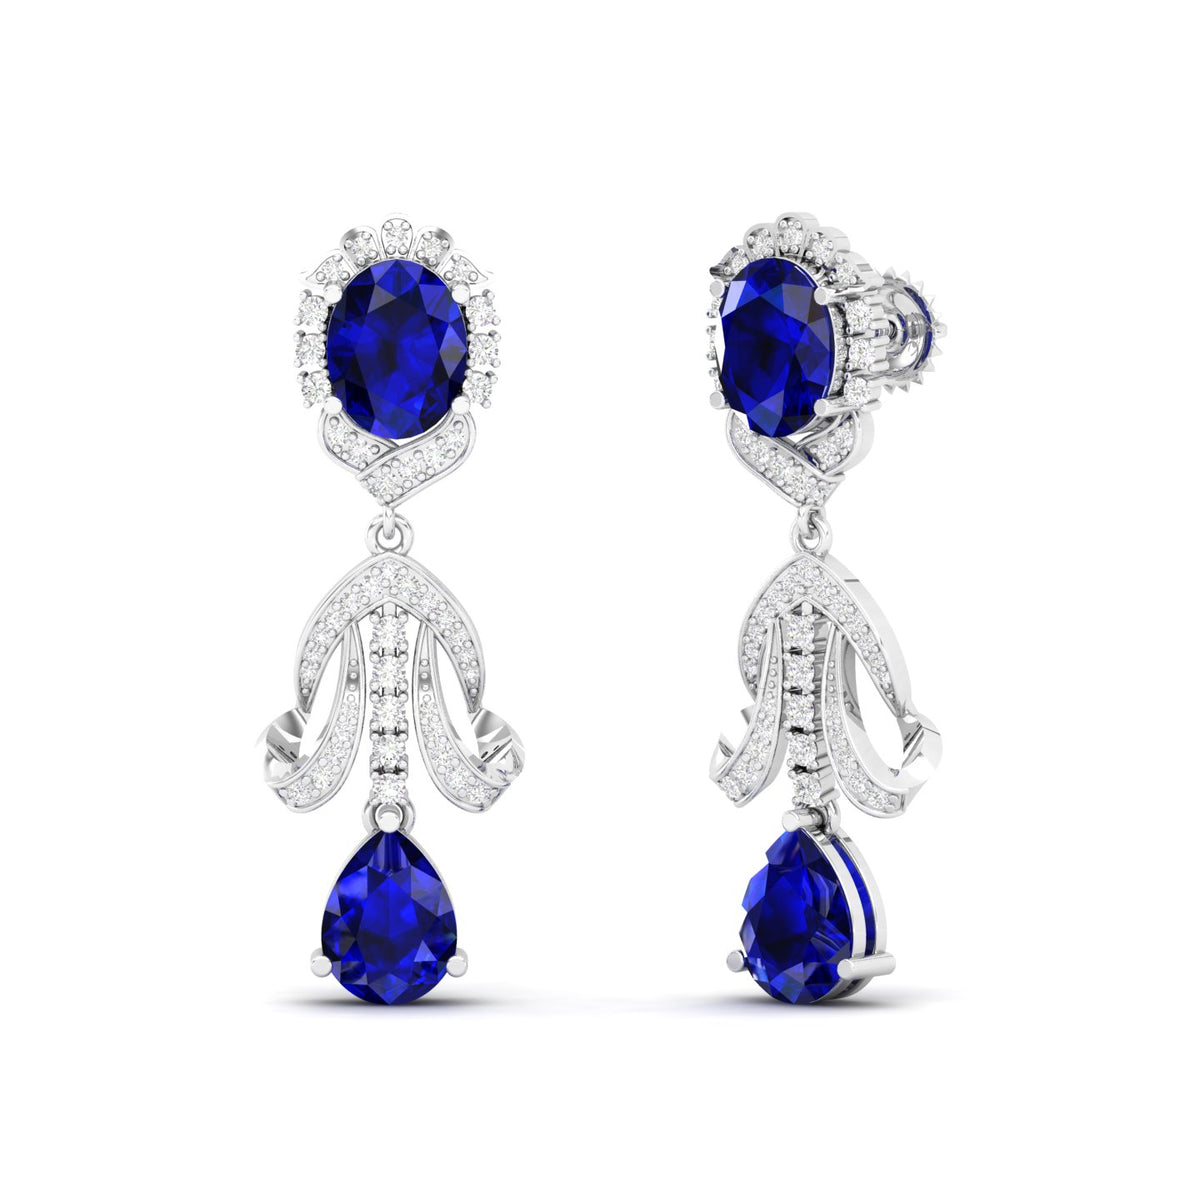 Maurya Utsokt Blue Sapphire Drop Earrings with Diamonds